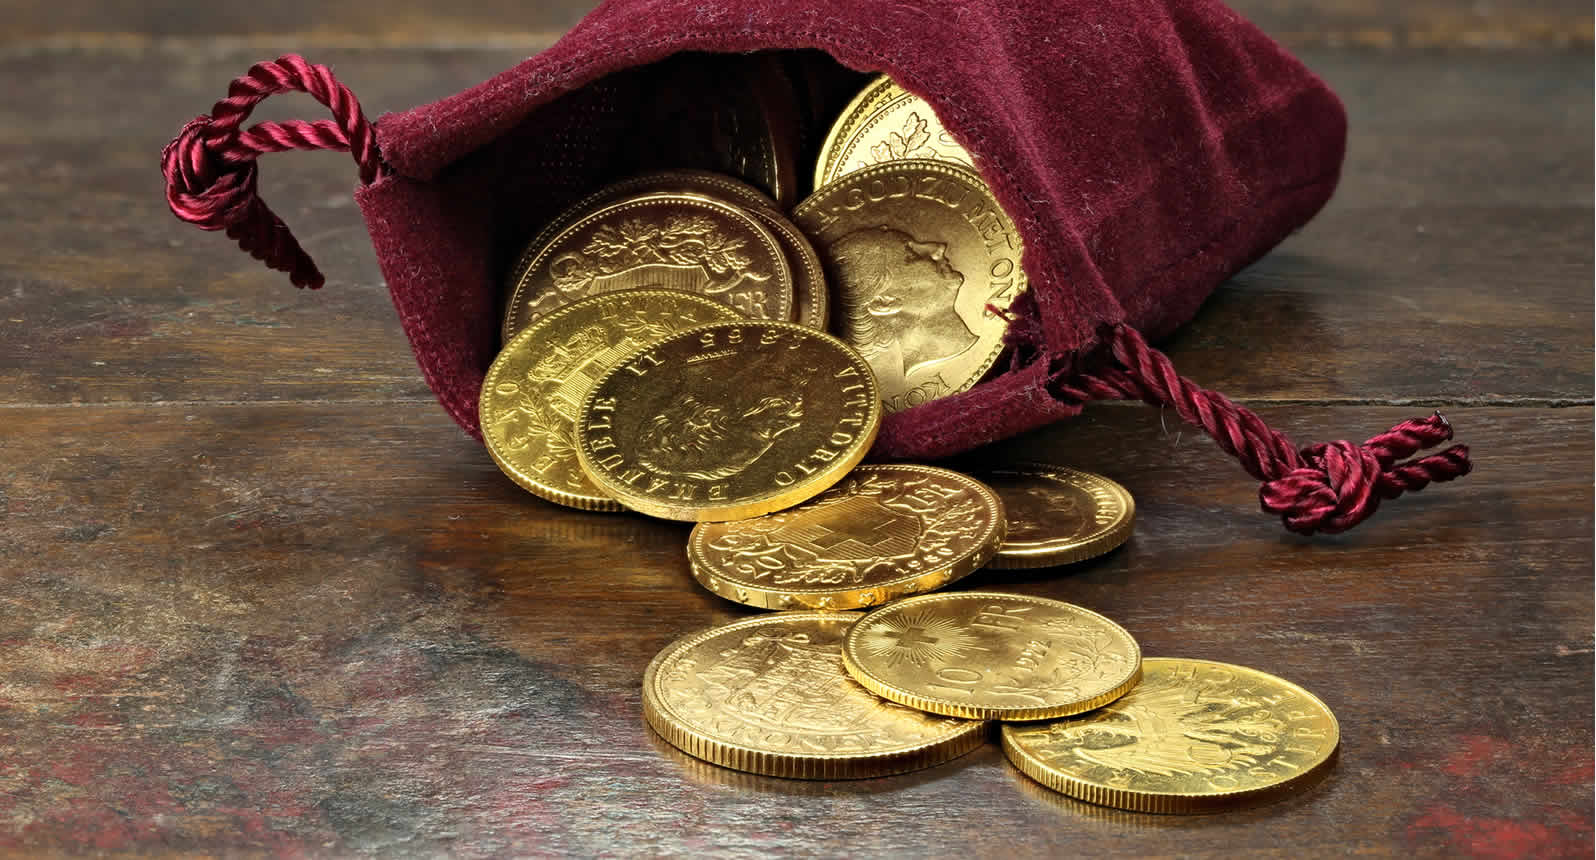 Fake gold coins